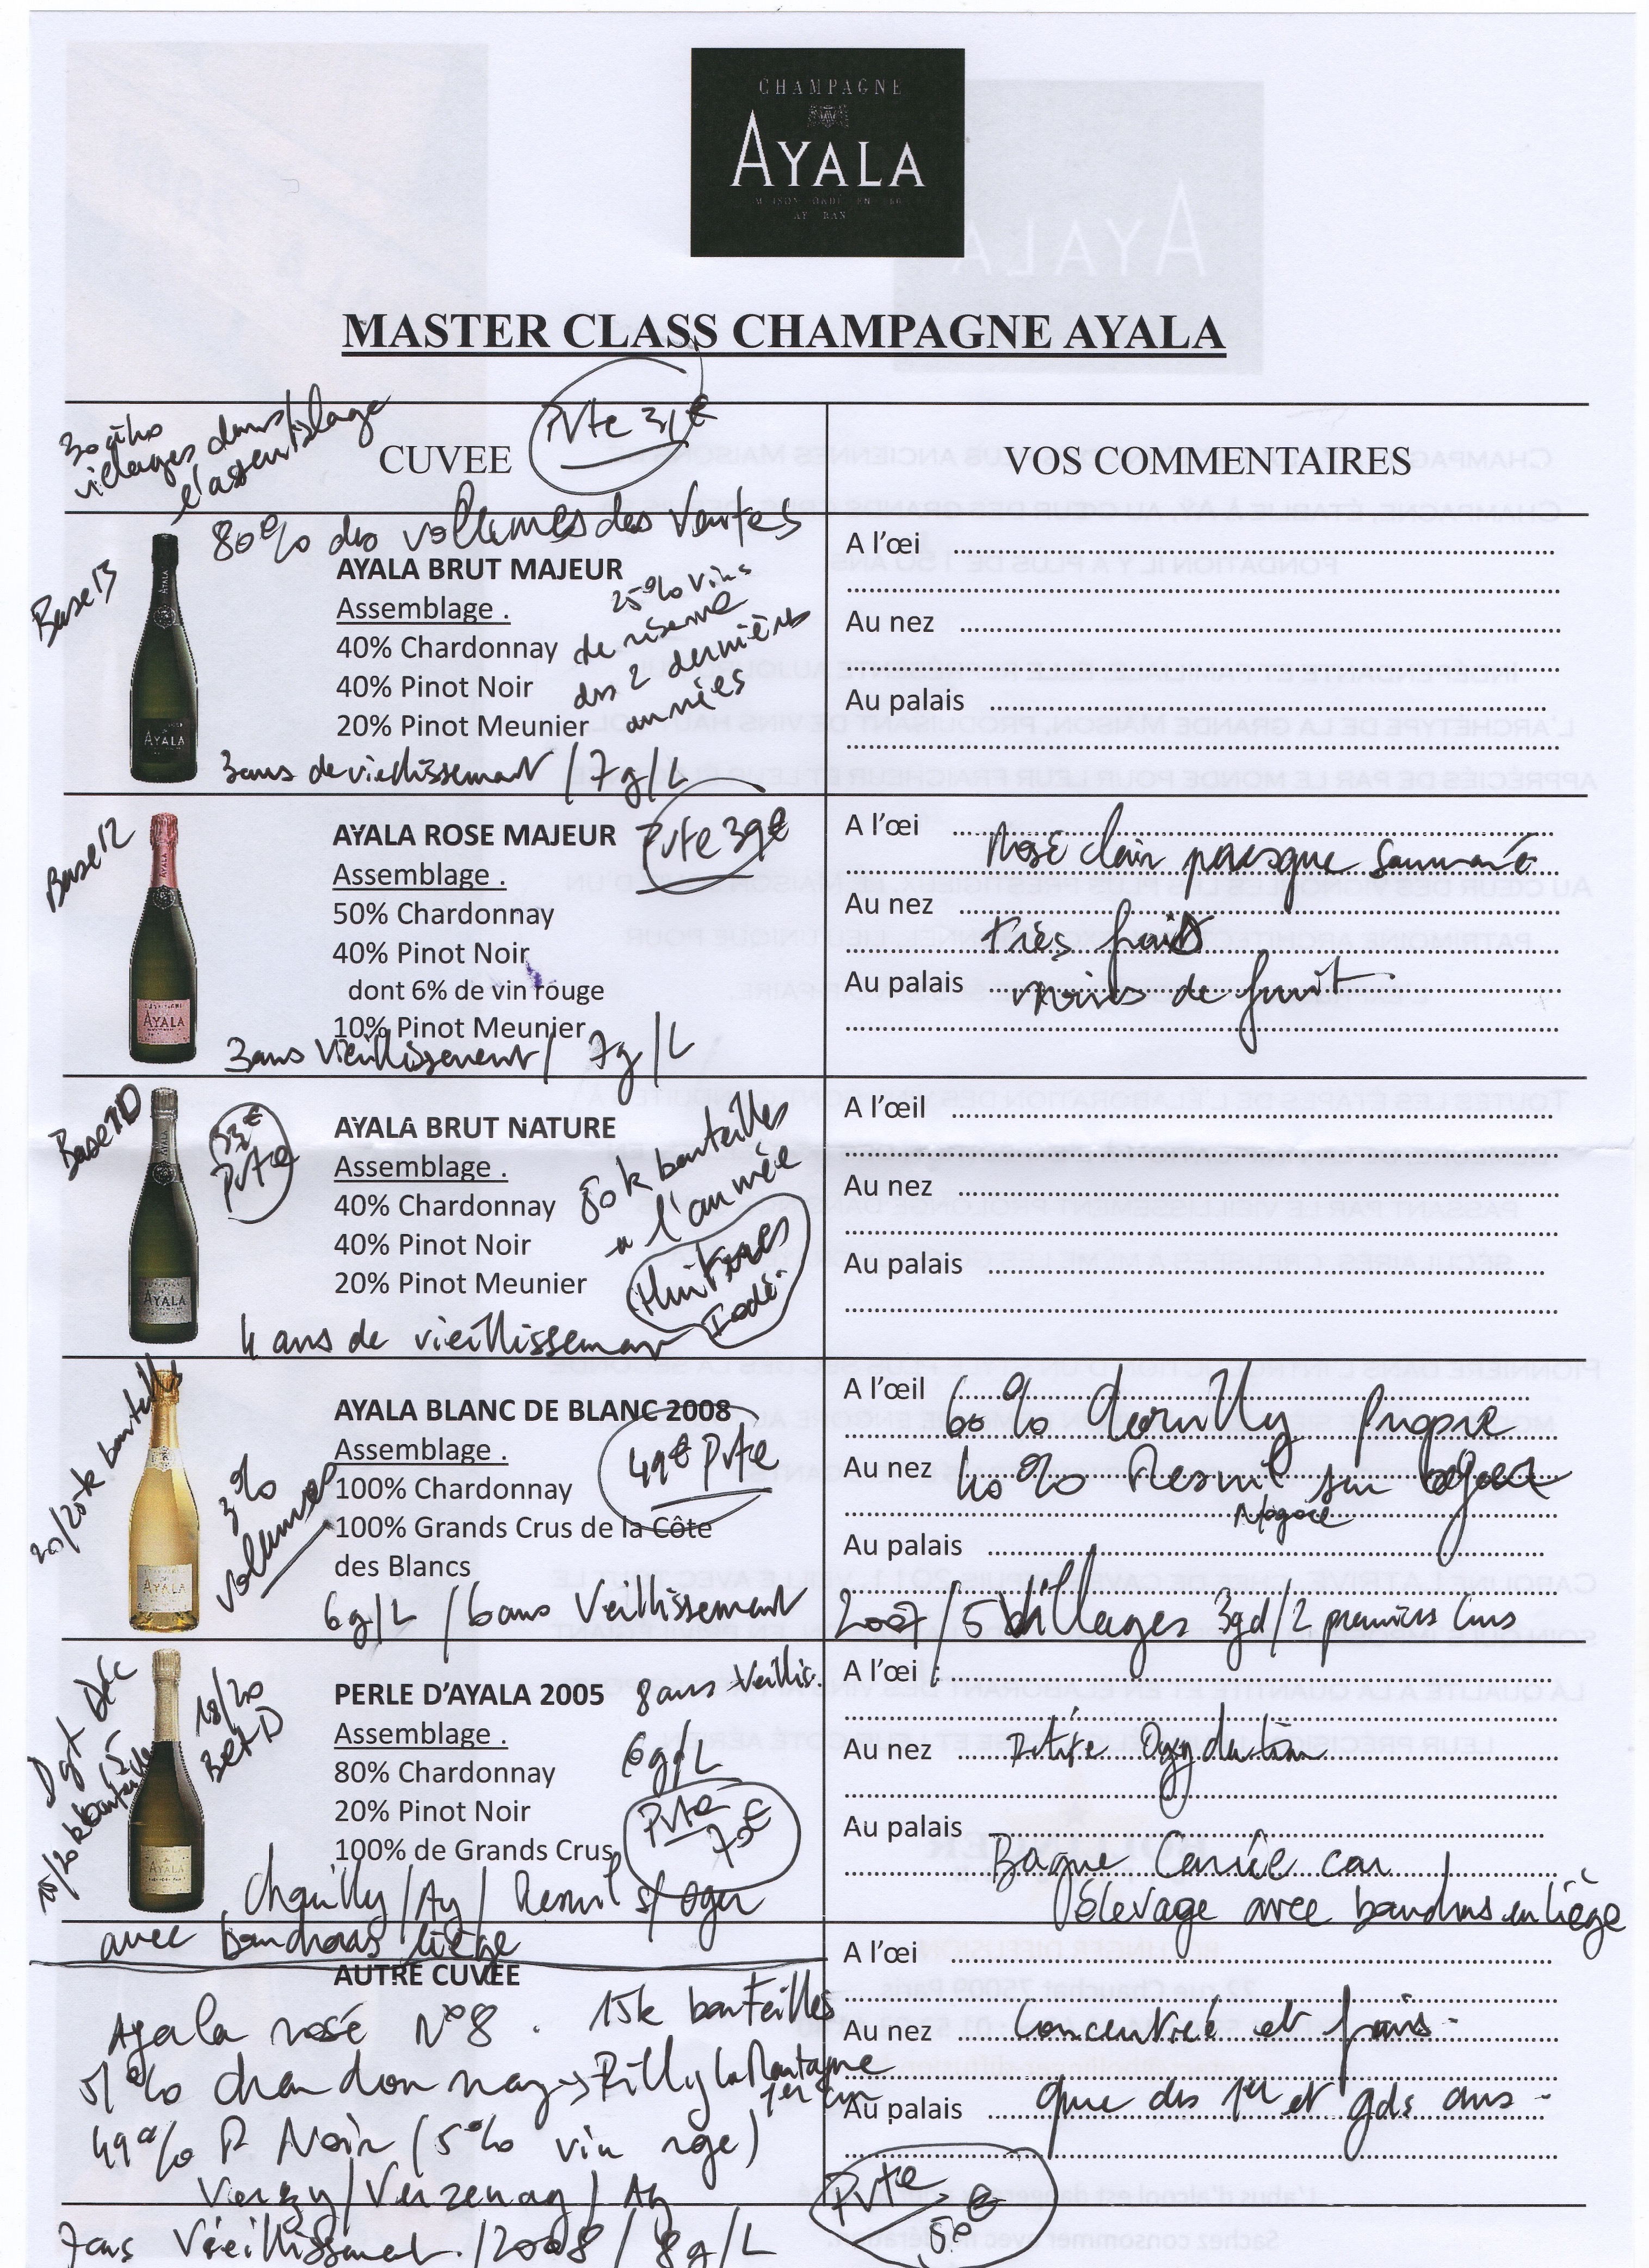 Notes des champagnes Ayala dégustés ce matin